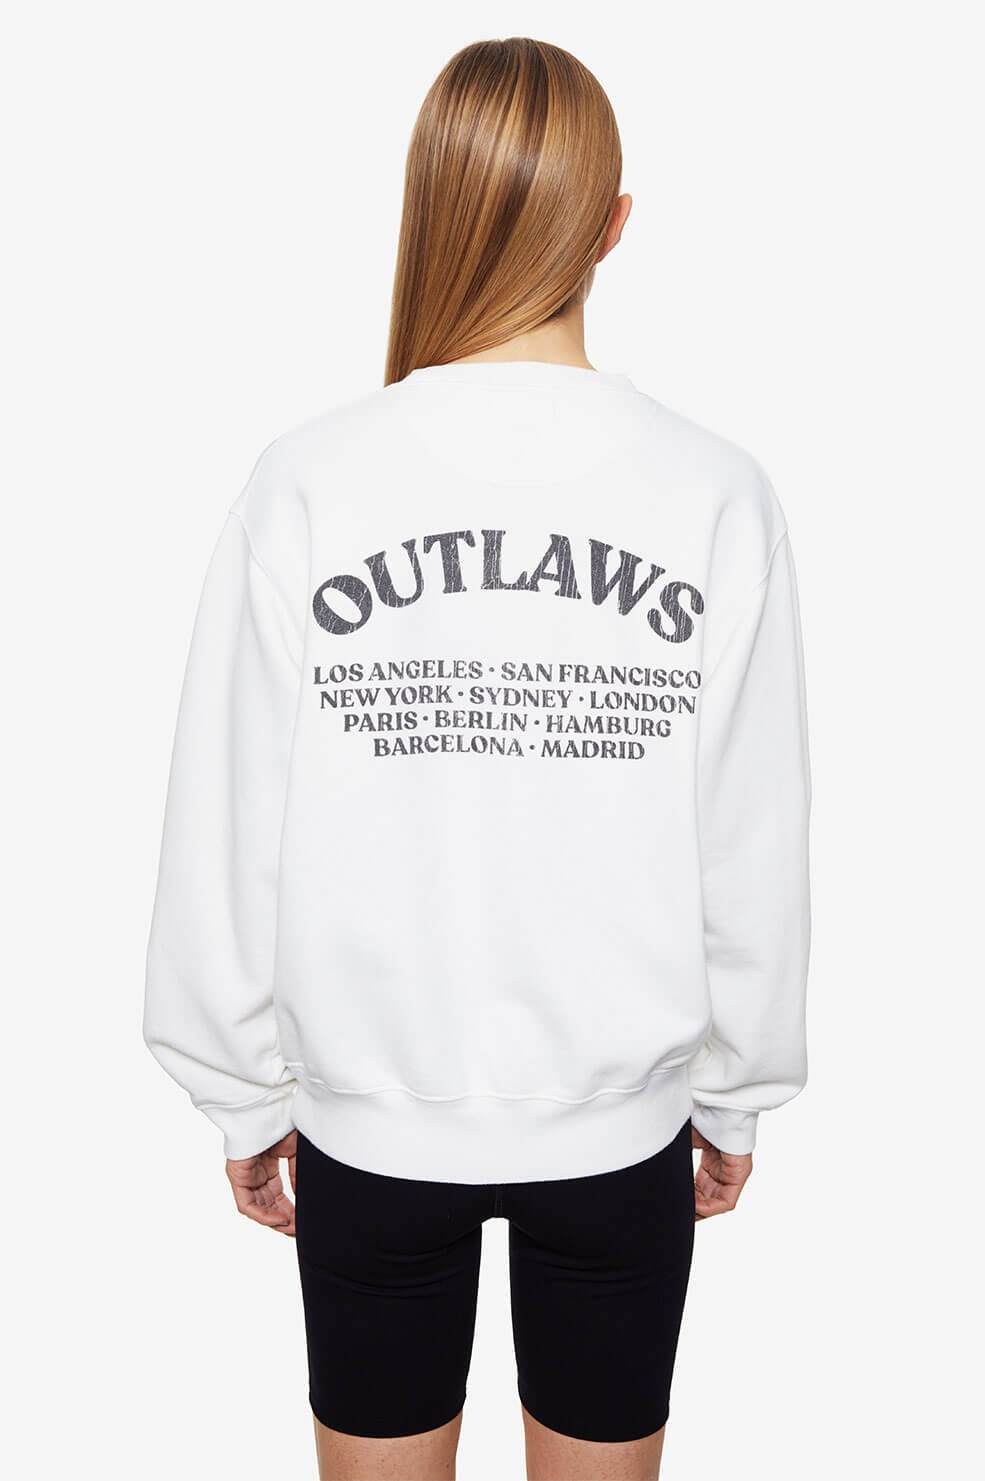 Anine Bing - Ramona Sweatshirt Outlaw in White